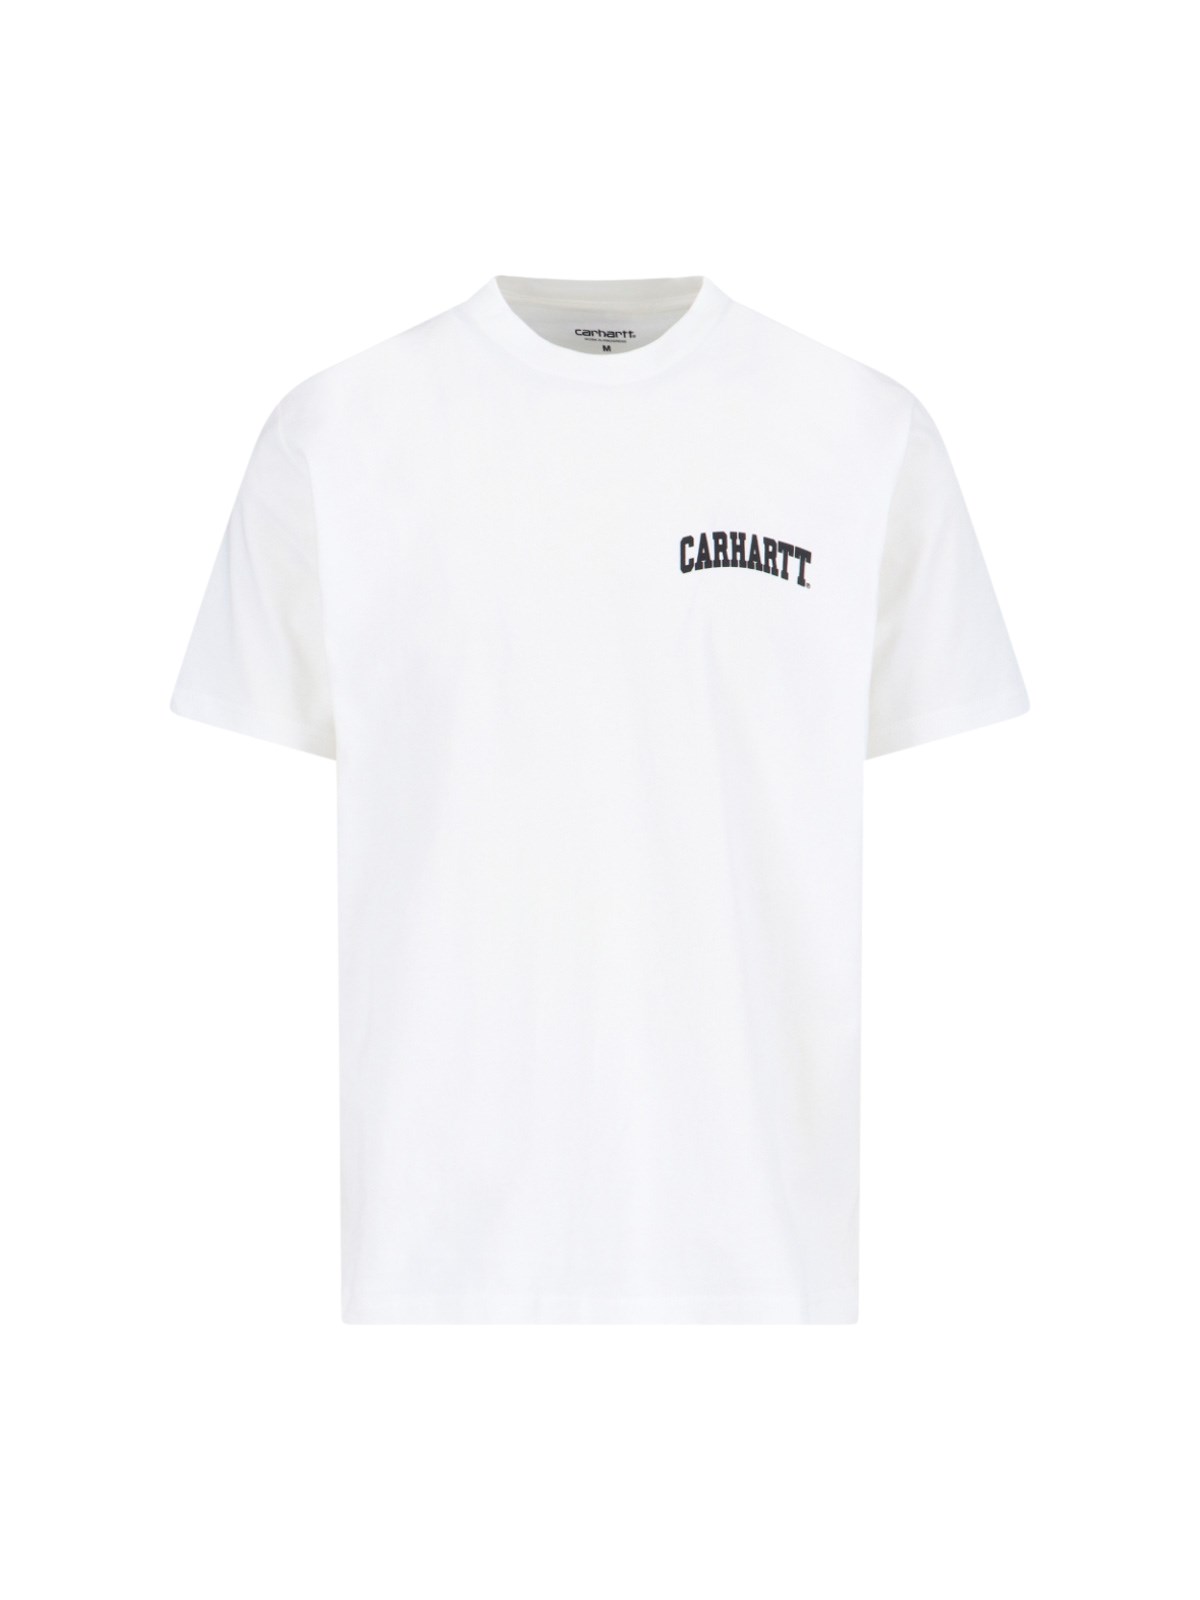 Carhartt White University Script T-shirt